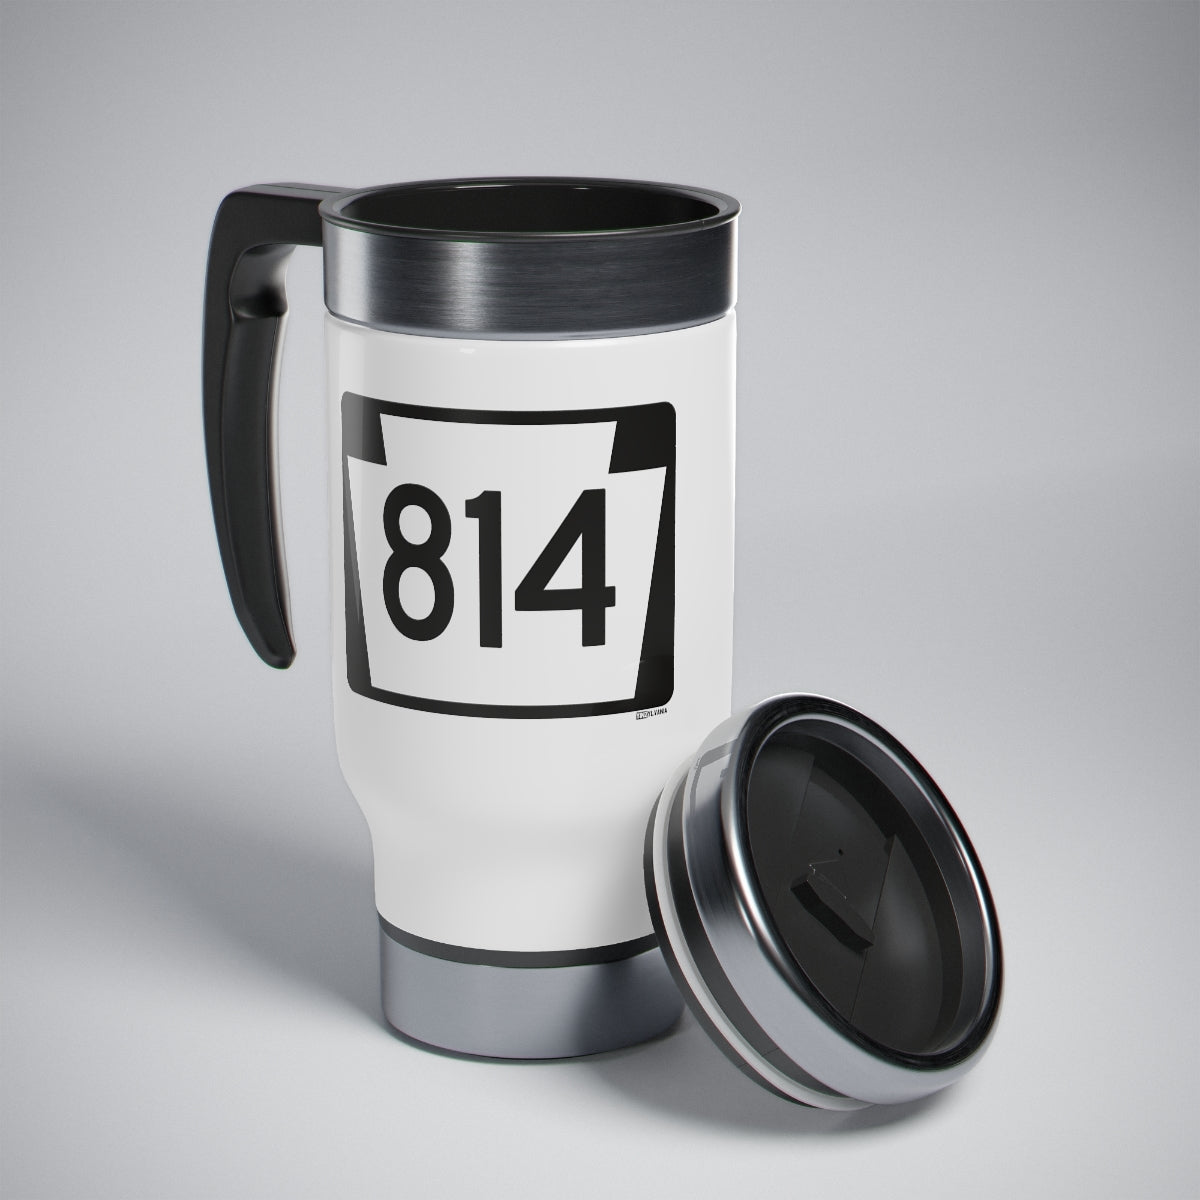 ROAD SIGN 814 - Stainless Steel Travel Mug with Handle, 14oz - Yinzylvania